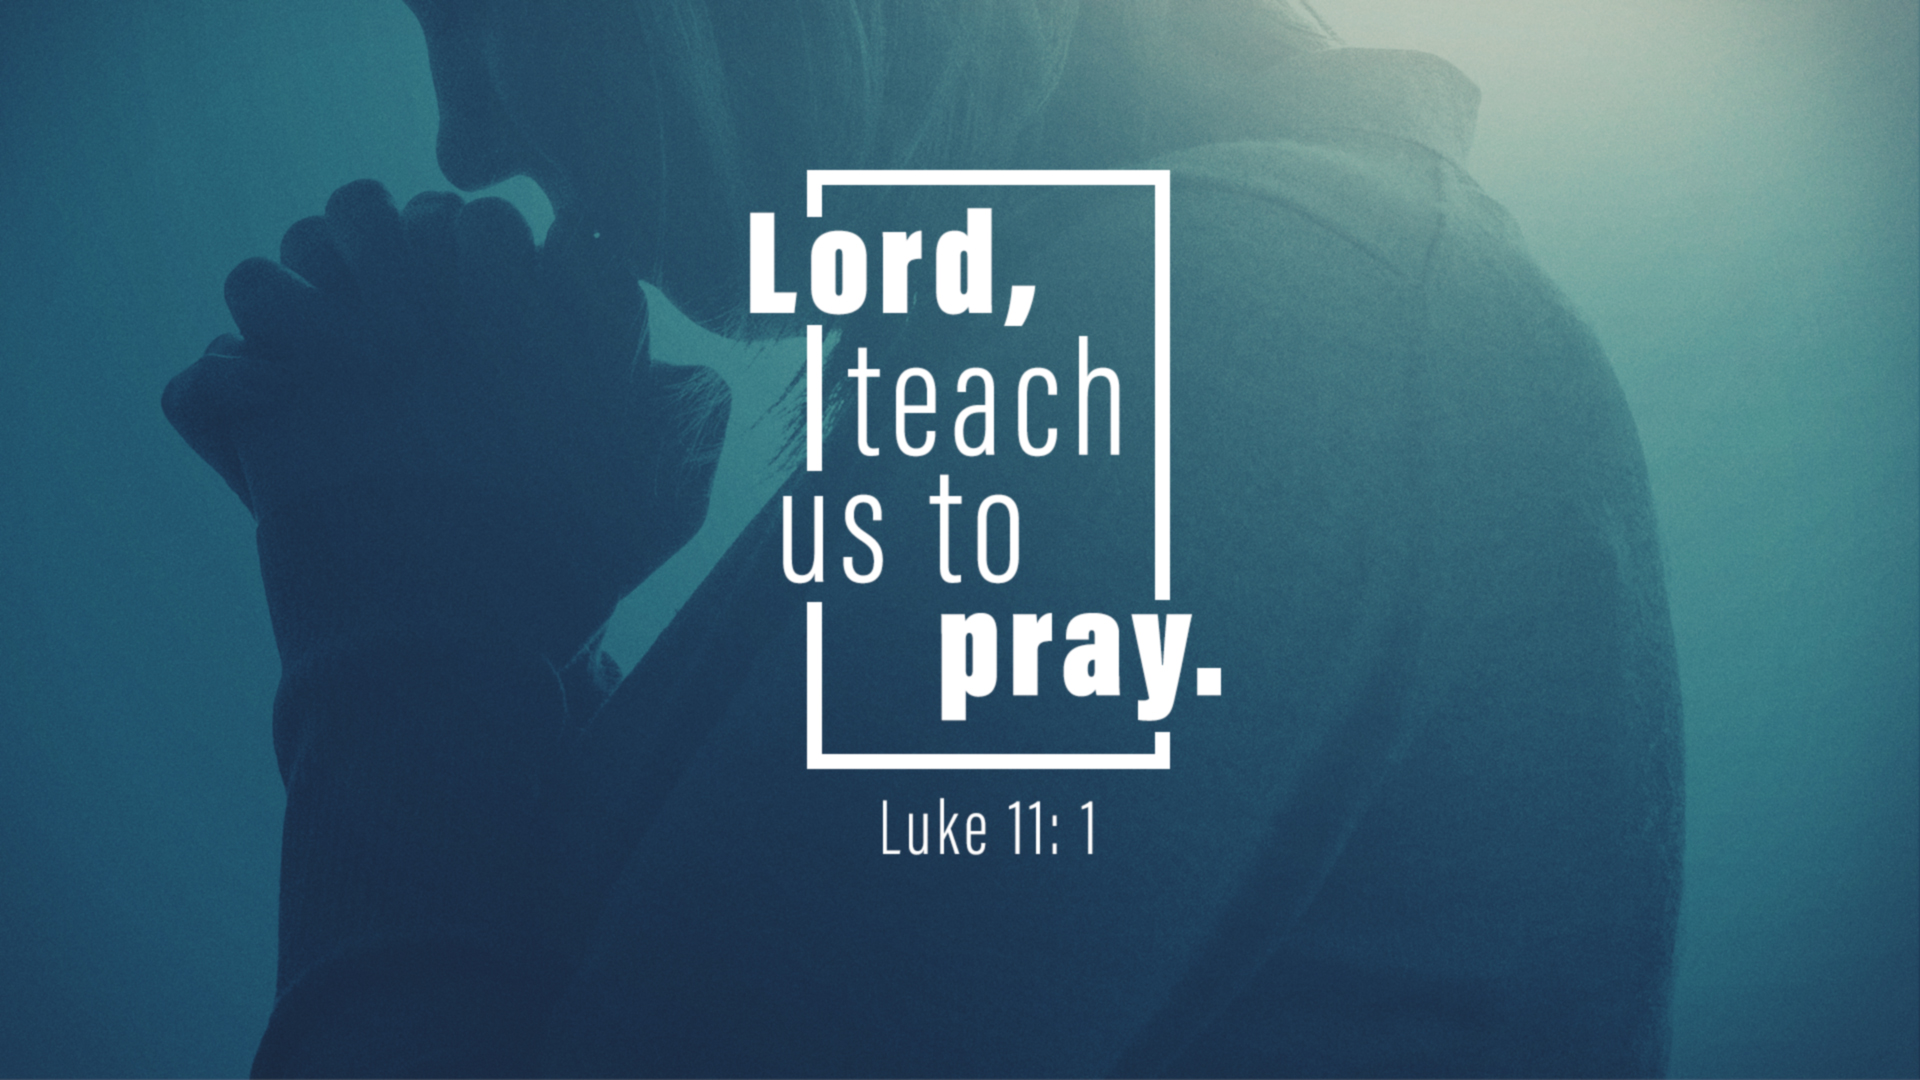 Lord, teach us to pray. | Real Life Church